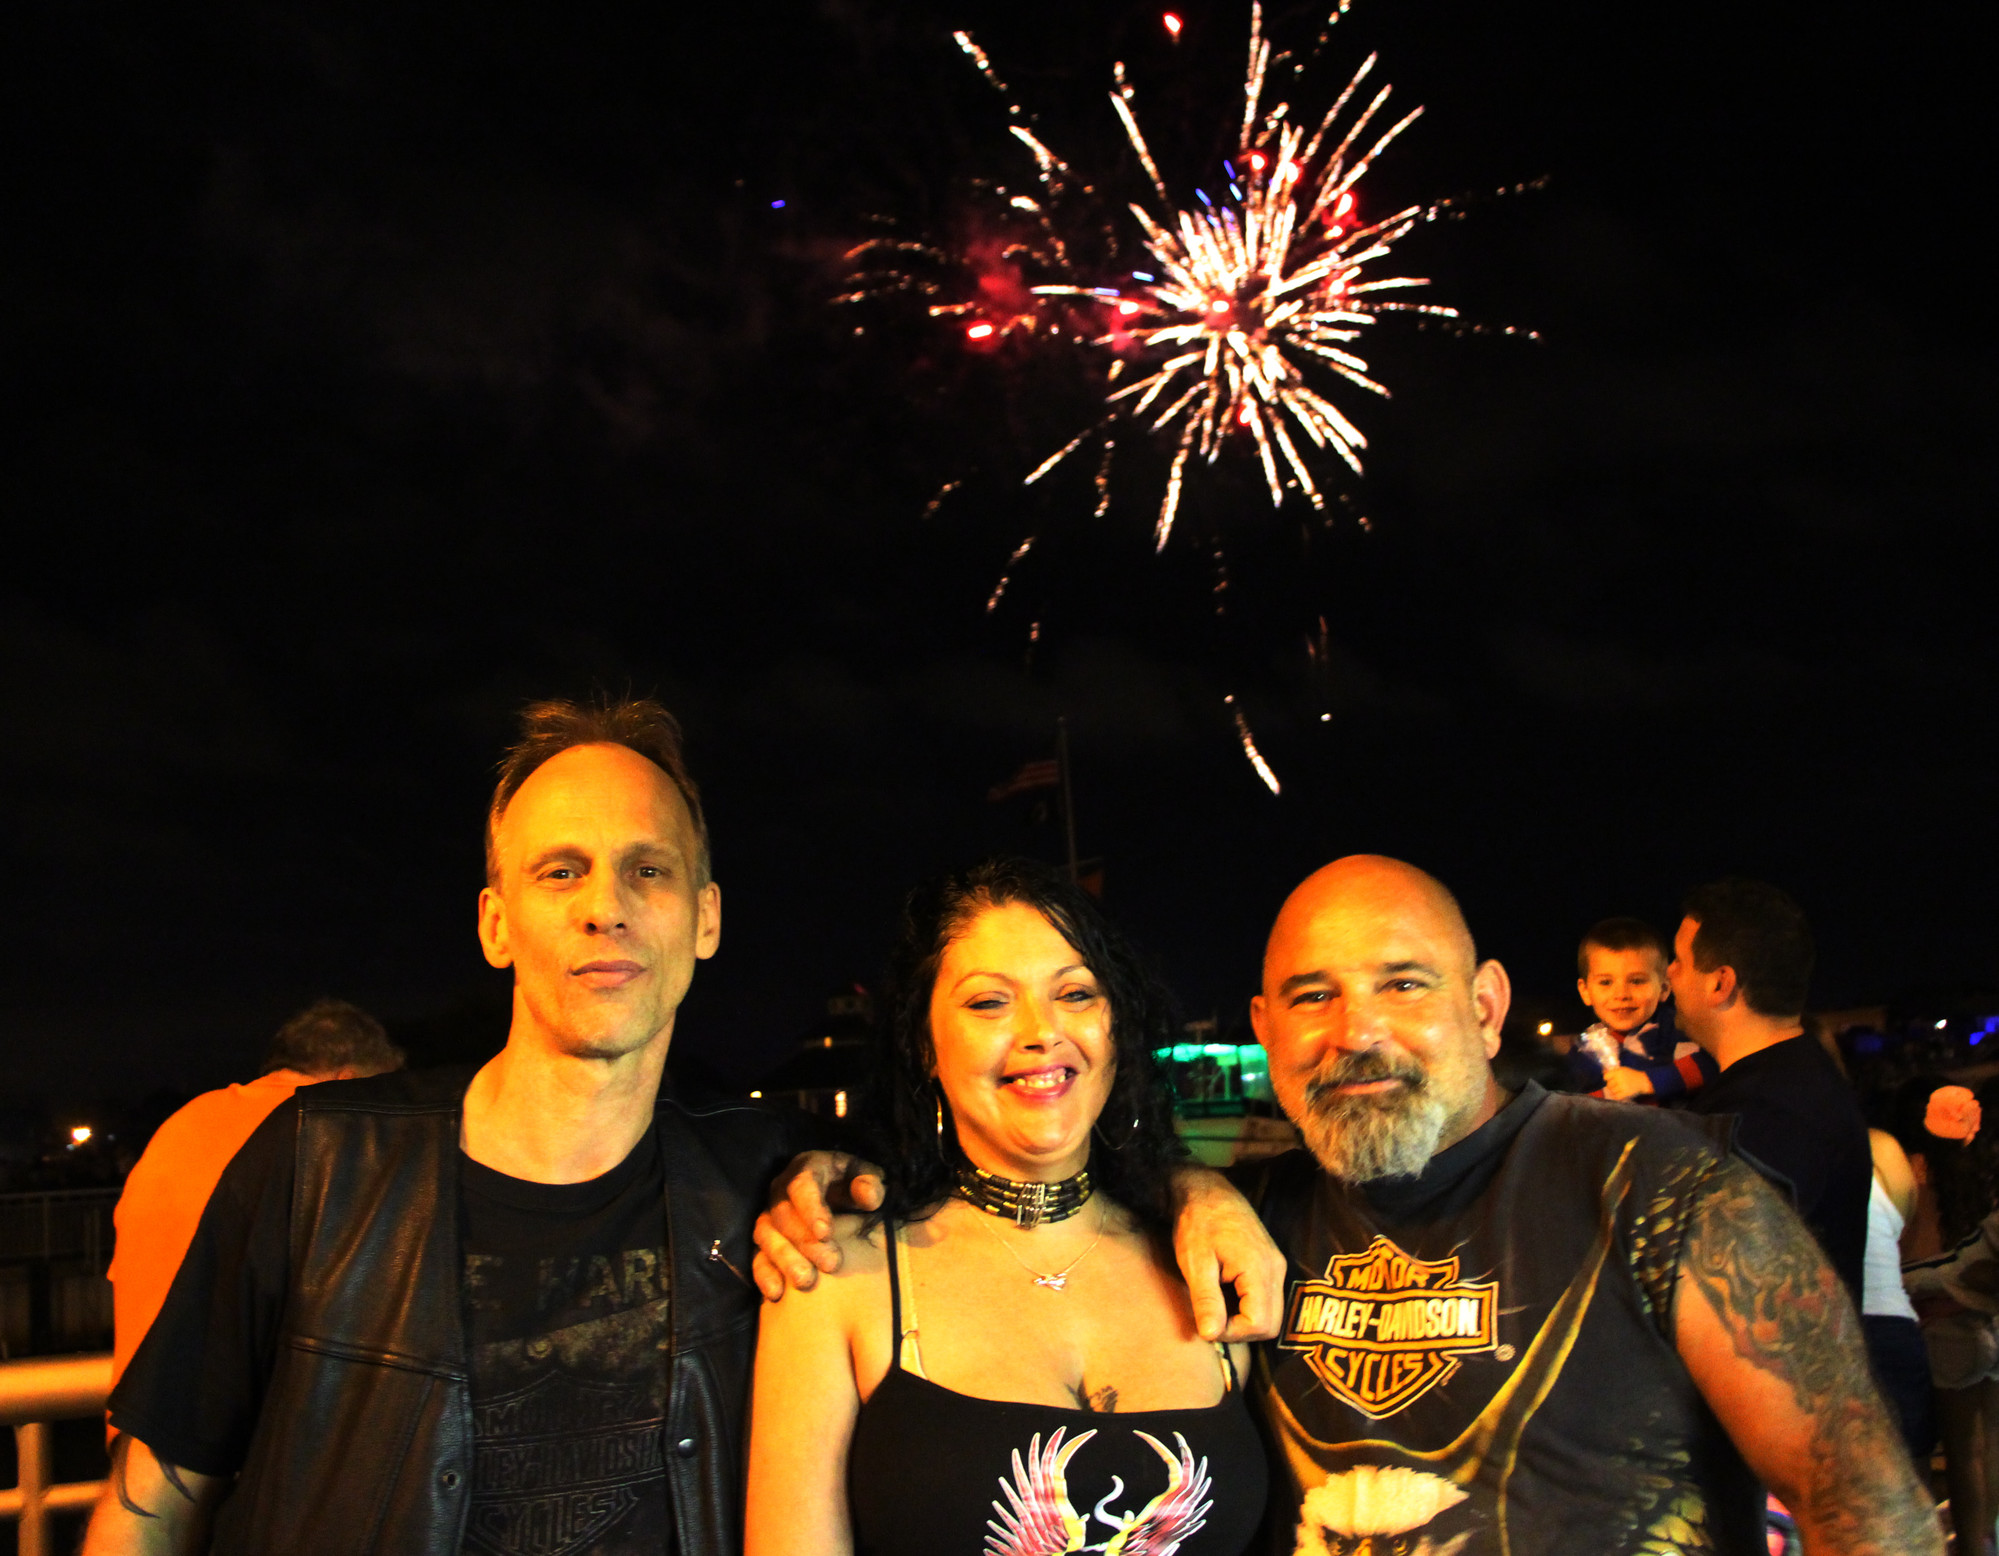 Glenn Mielinis with his wife Rhea and their friend Michael Homan were enjoying the fireworks.